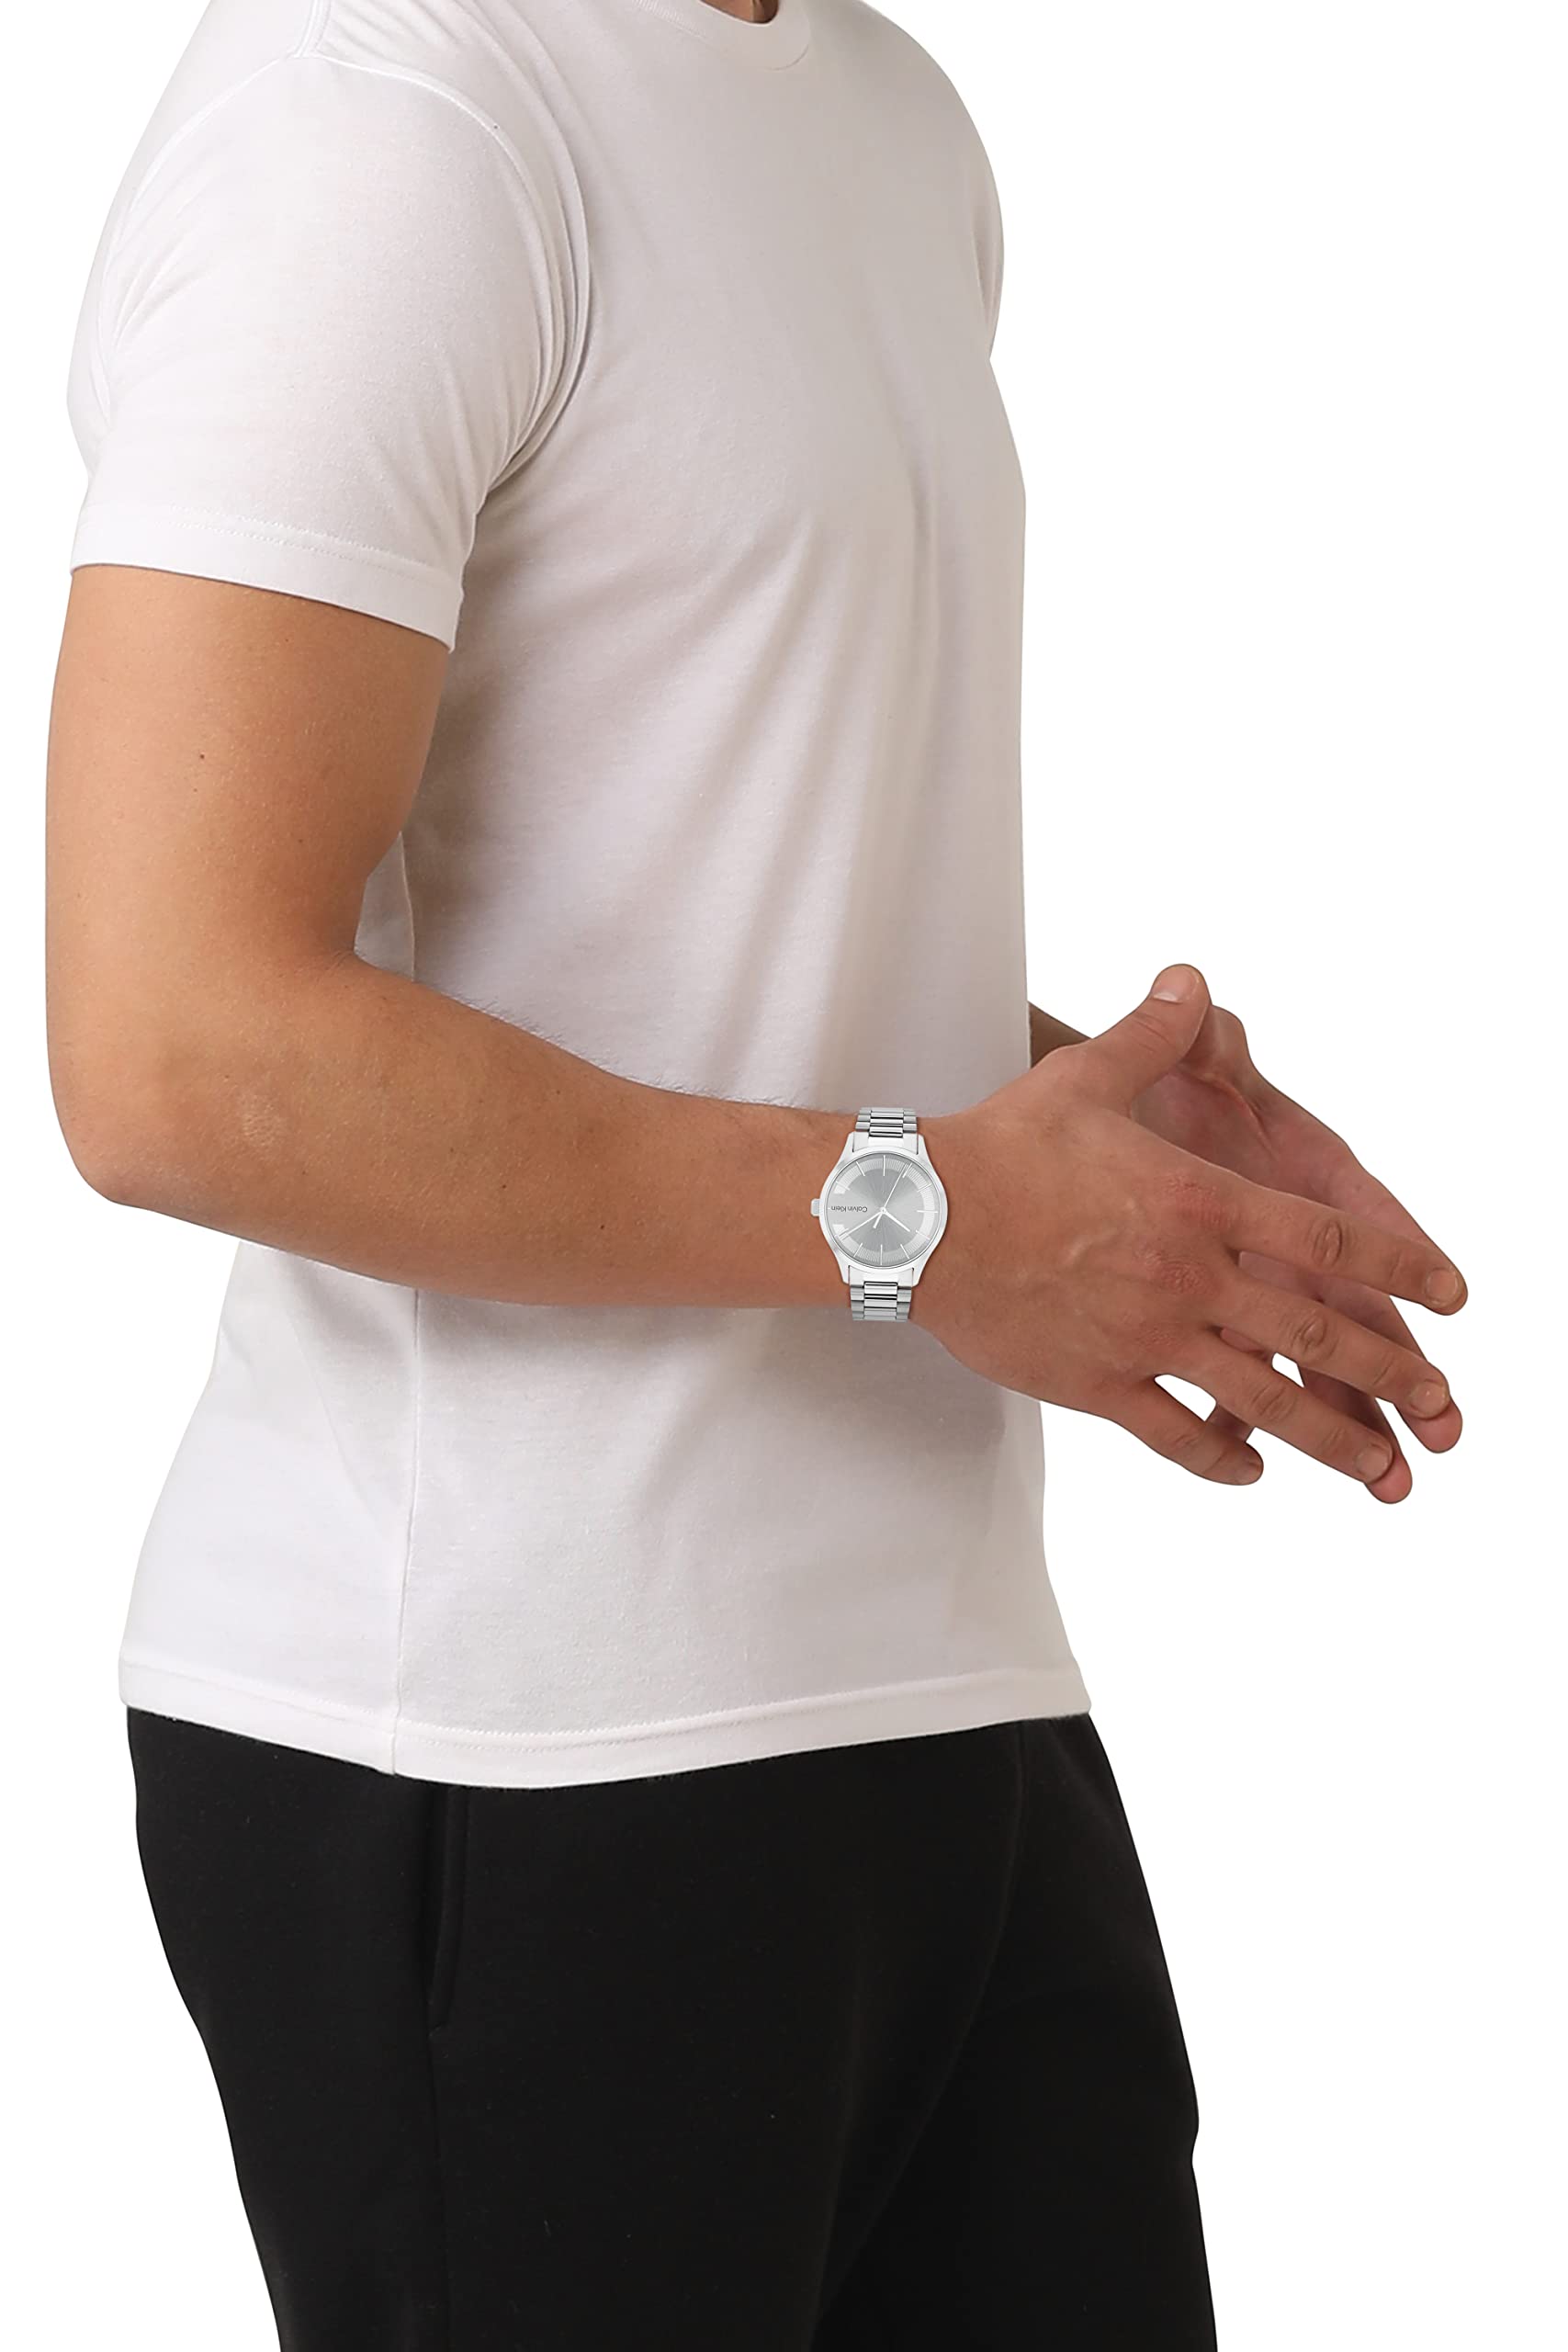 Calvin Klein Unisex Quartz Stainless Steel and Link Bracelet Watch, Color: Silver (Model: 25200036)